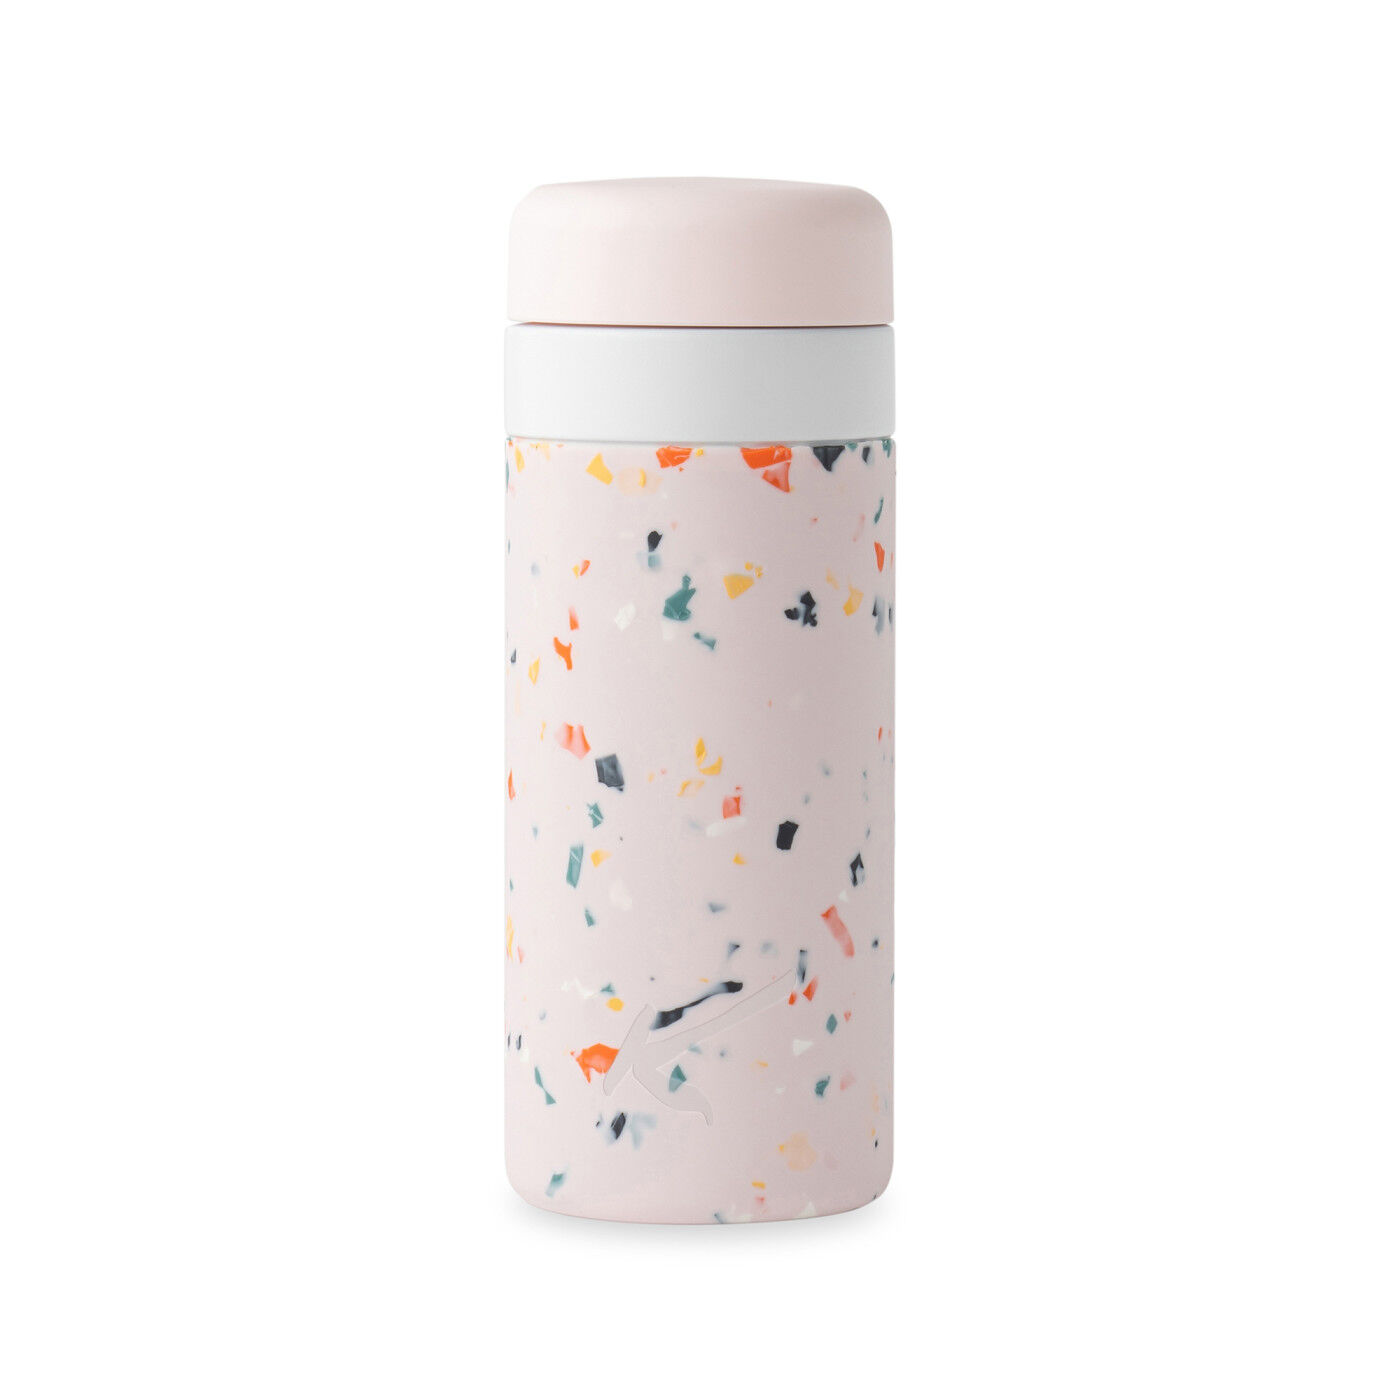 https://www.drivemerch.com/wp-content/uploads/2022/10/branded-wp-porter-insulated-ceramic-bottle-16oz-pink-terazzo.jpg